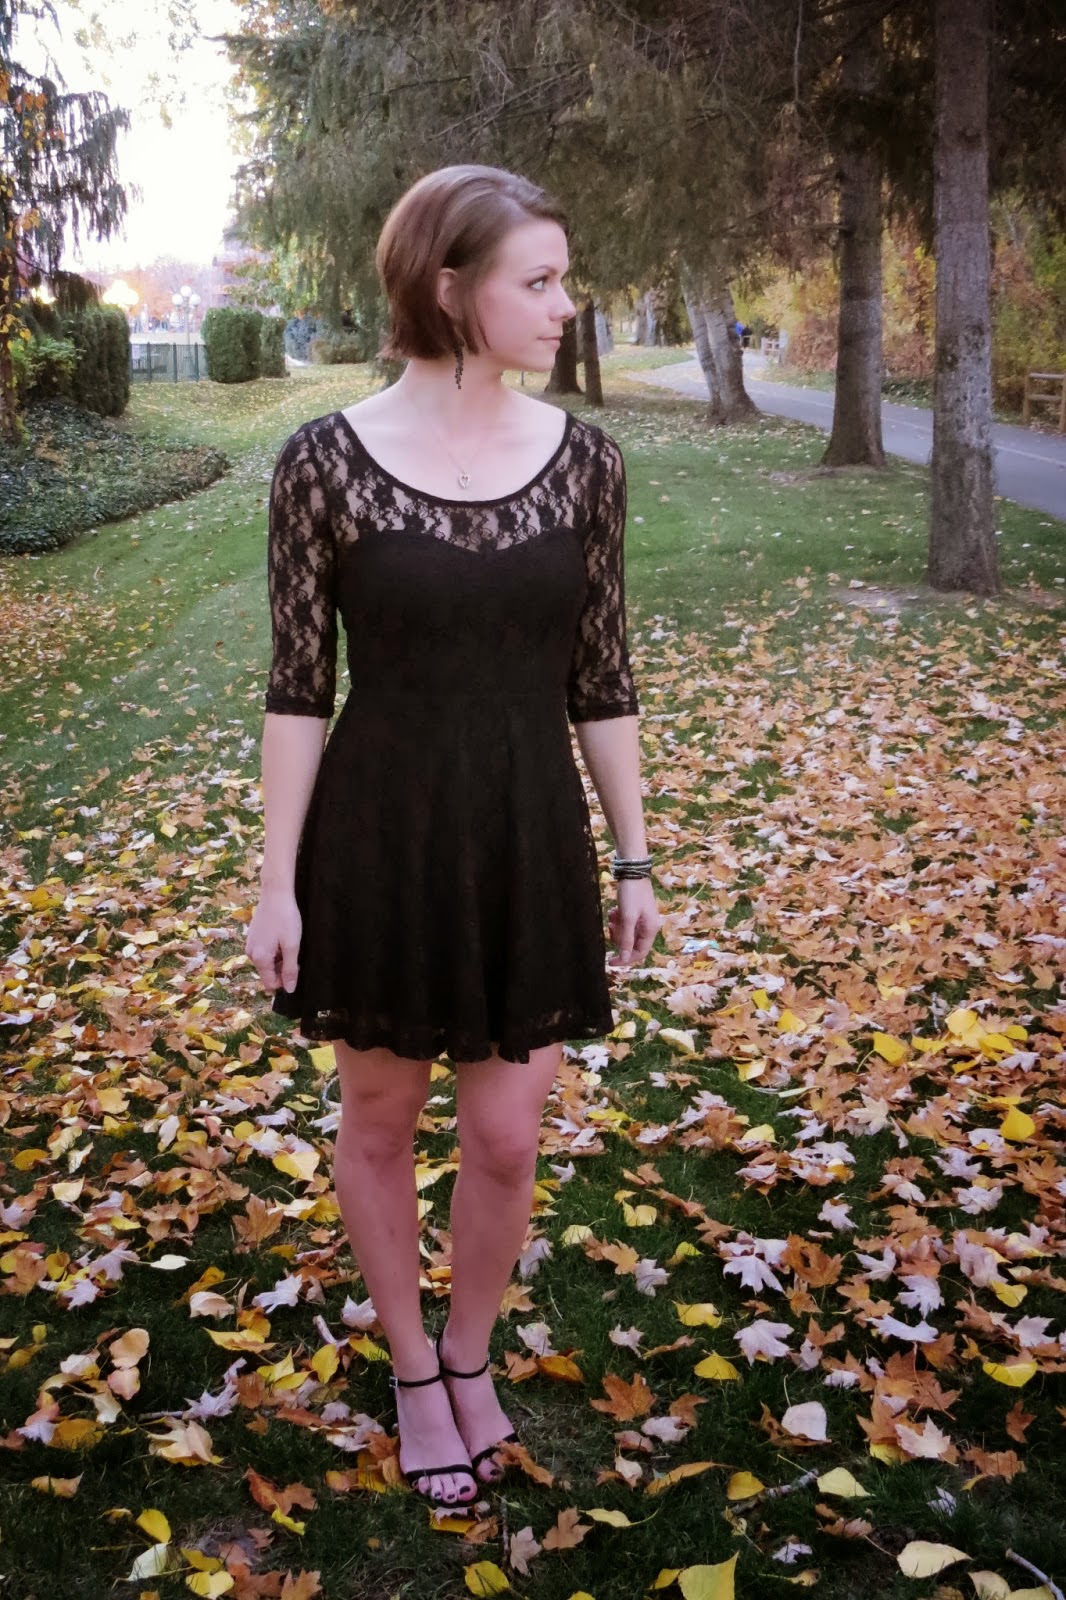 Lacy Black Dress and Stilettos